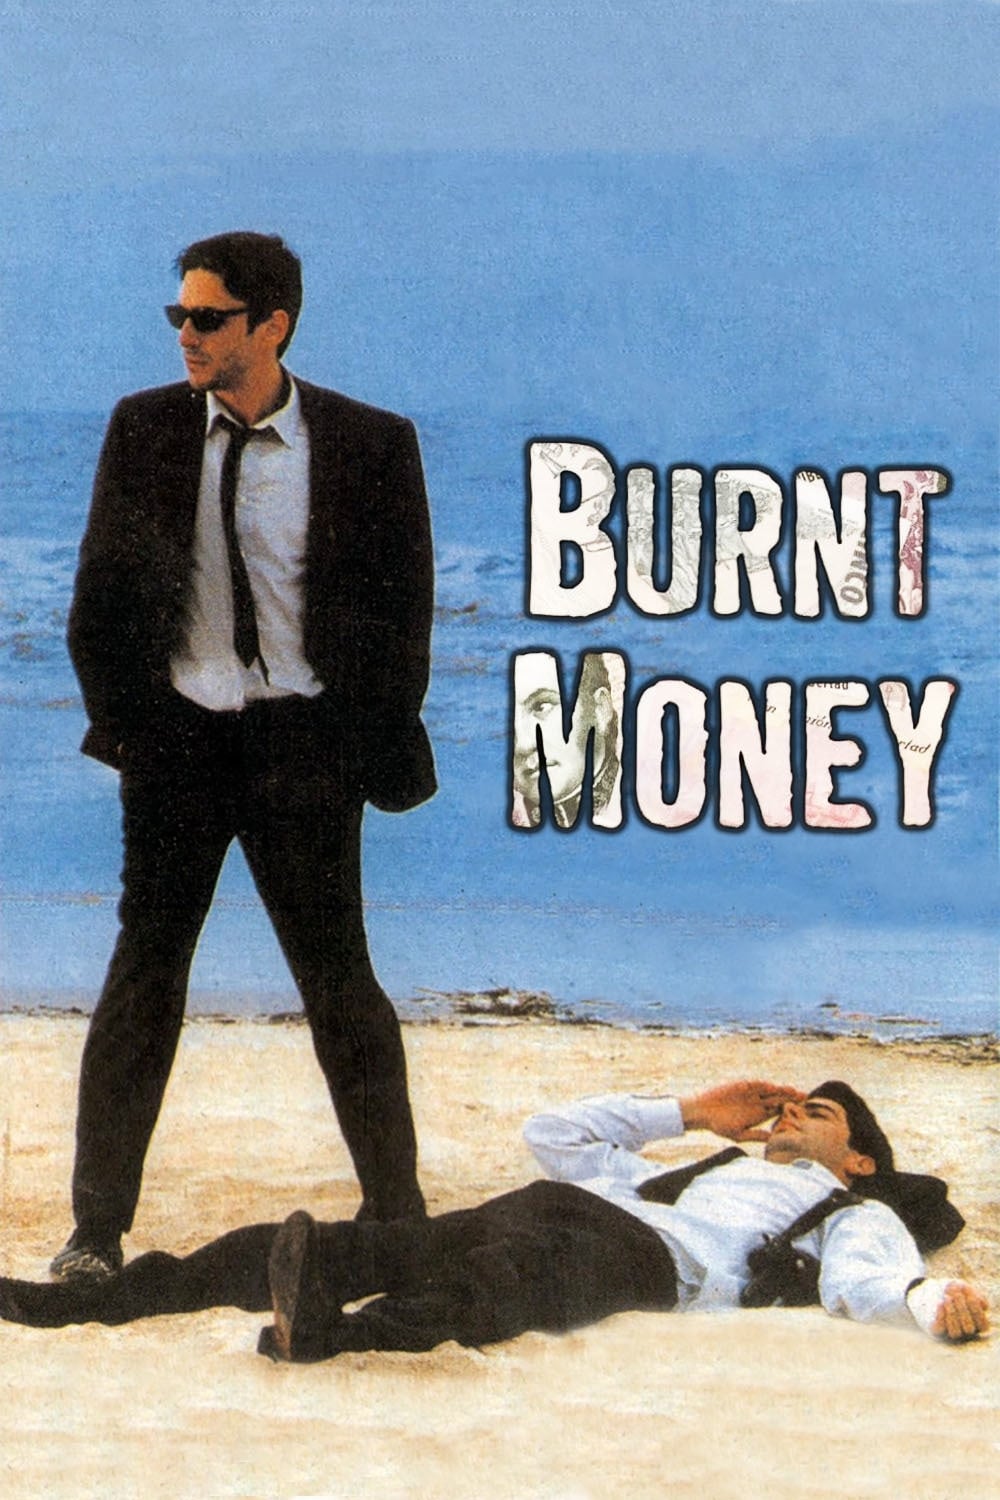 Burnt Money (2000)